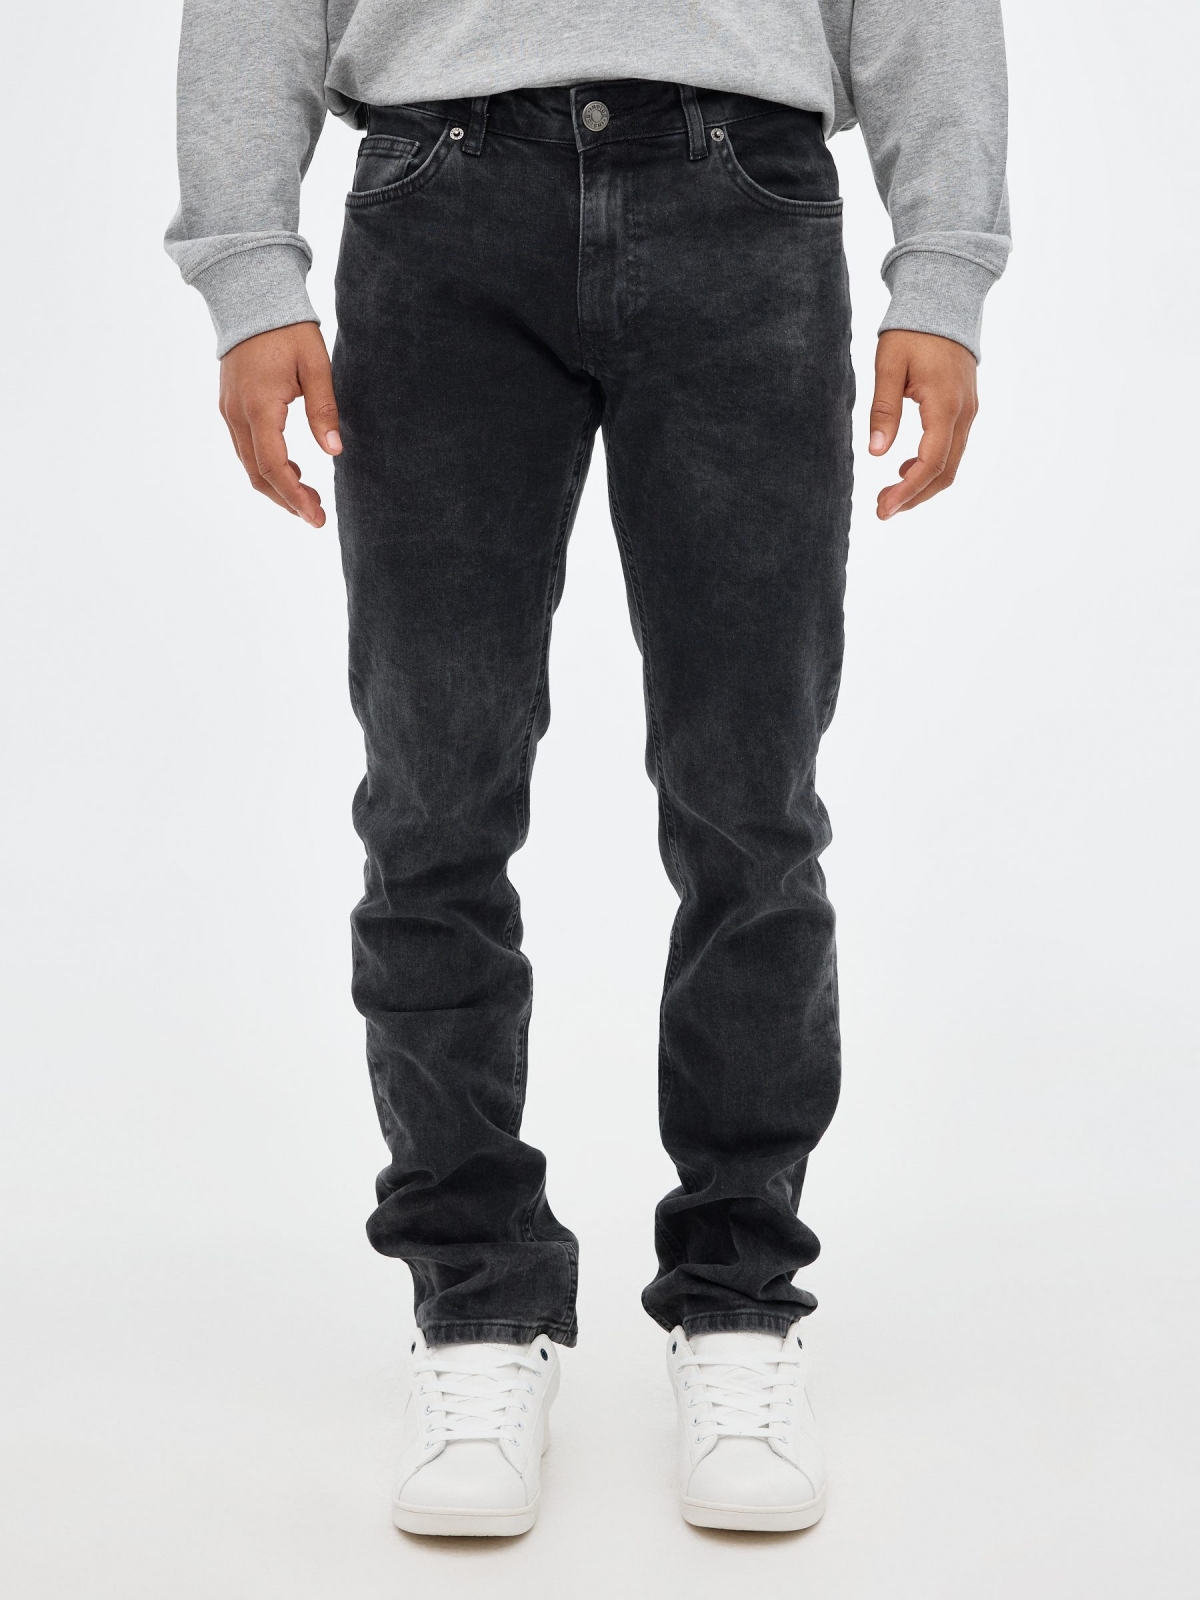 Black regular jeans black middle front view